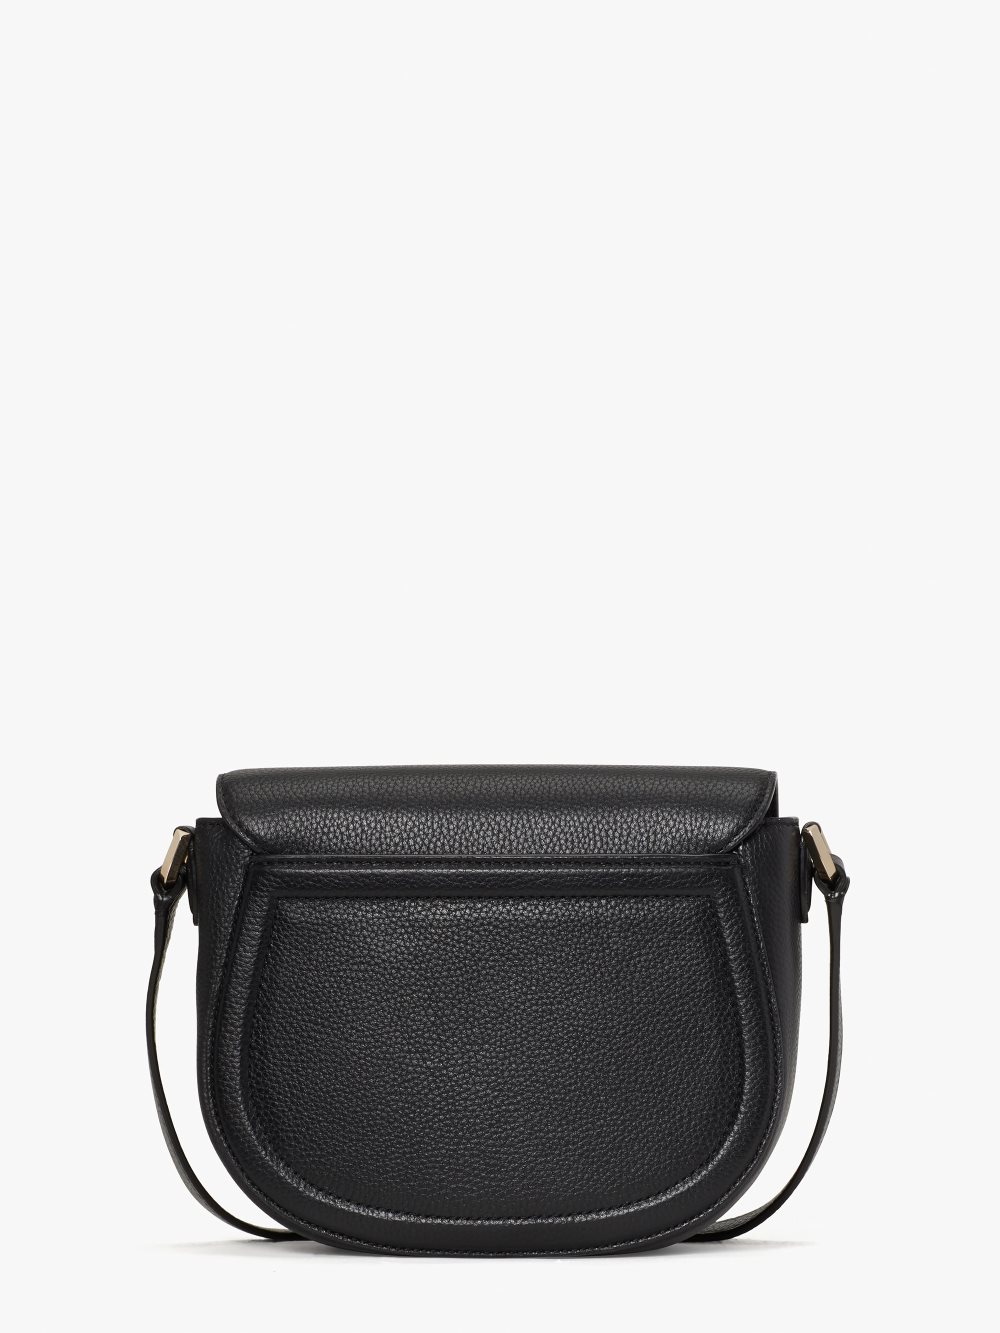 Women's black knott medium saddle bag | Kate Spade